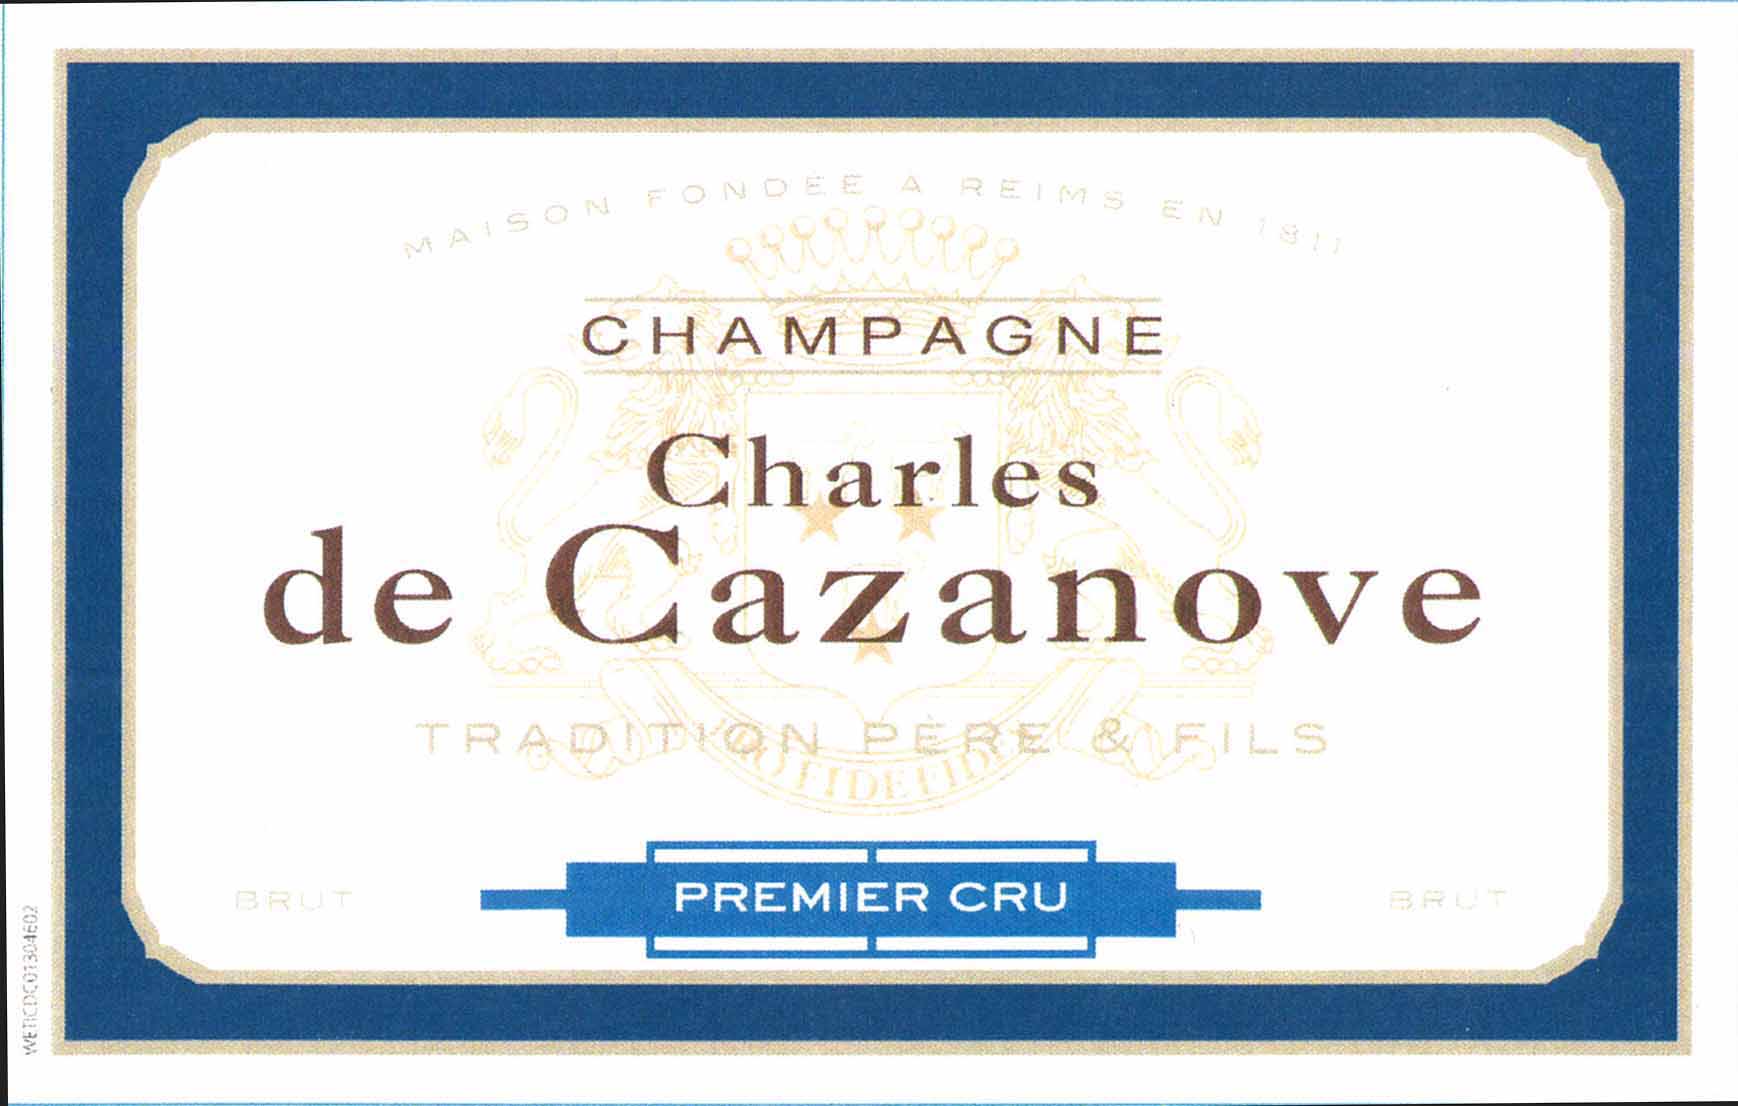 Charles de Cazanove Brut Premier Cru label